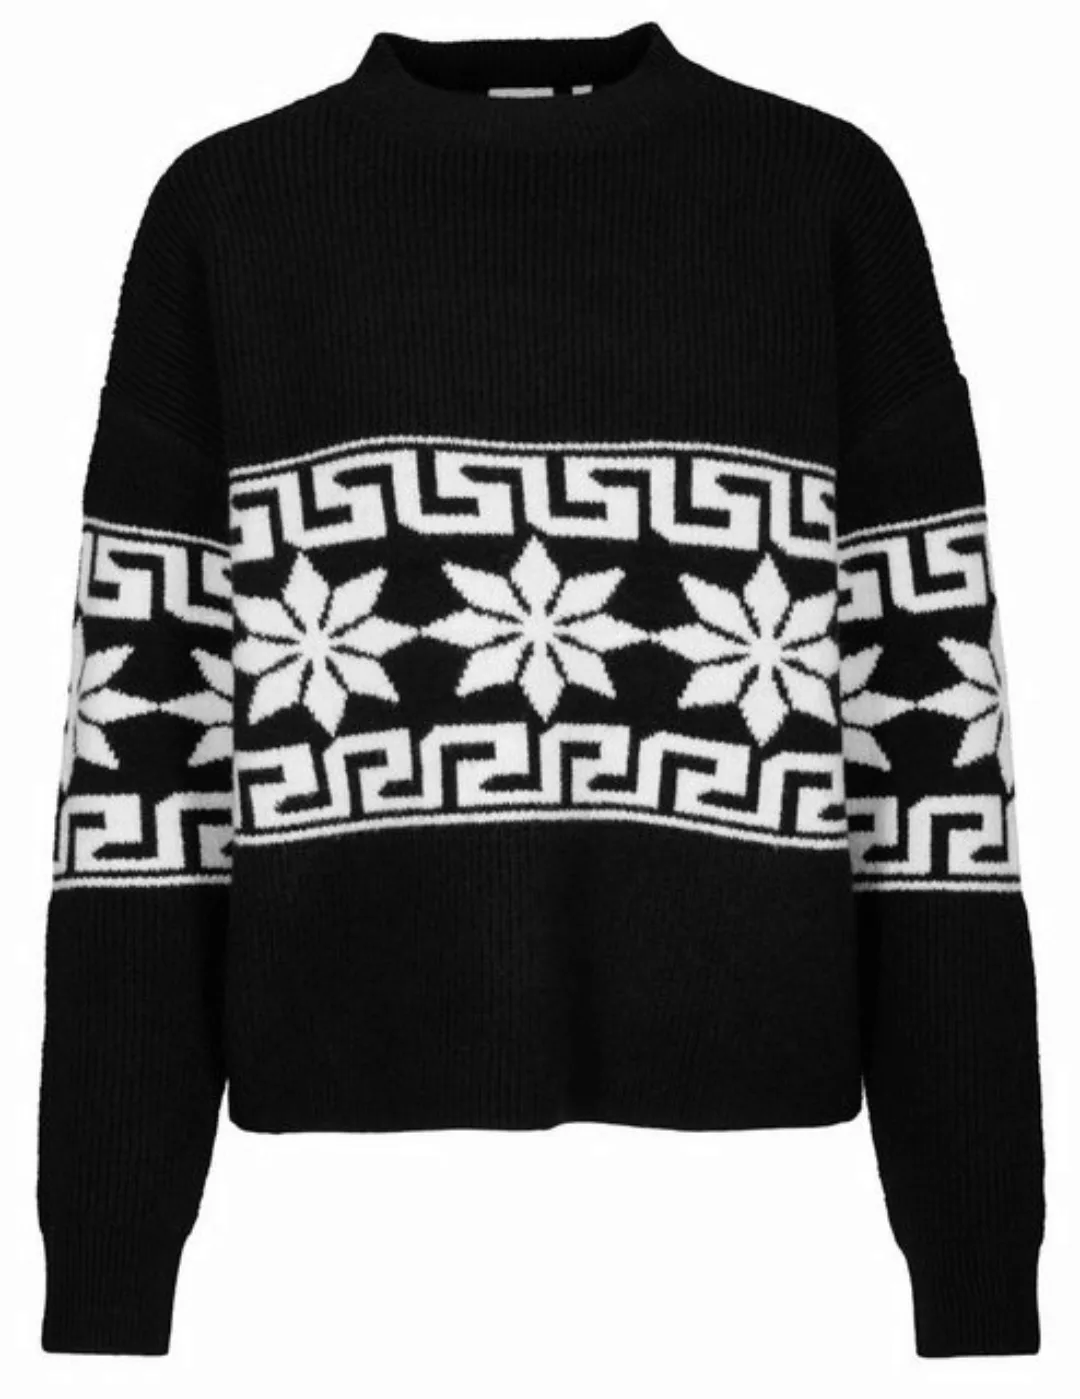 THE FASHION PEOPLE Kurzarmpullover Knitted Sweater FAR ISLE günstig online kaufen